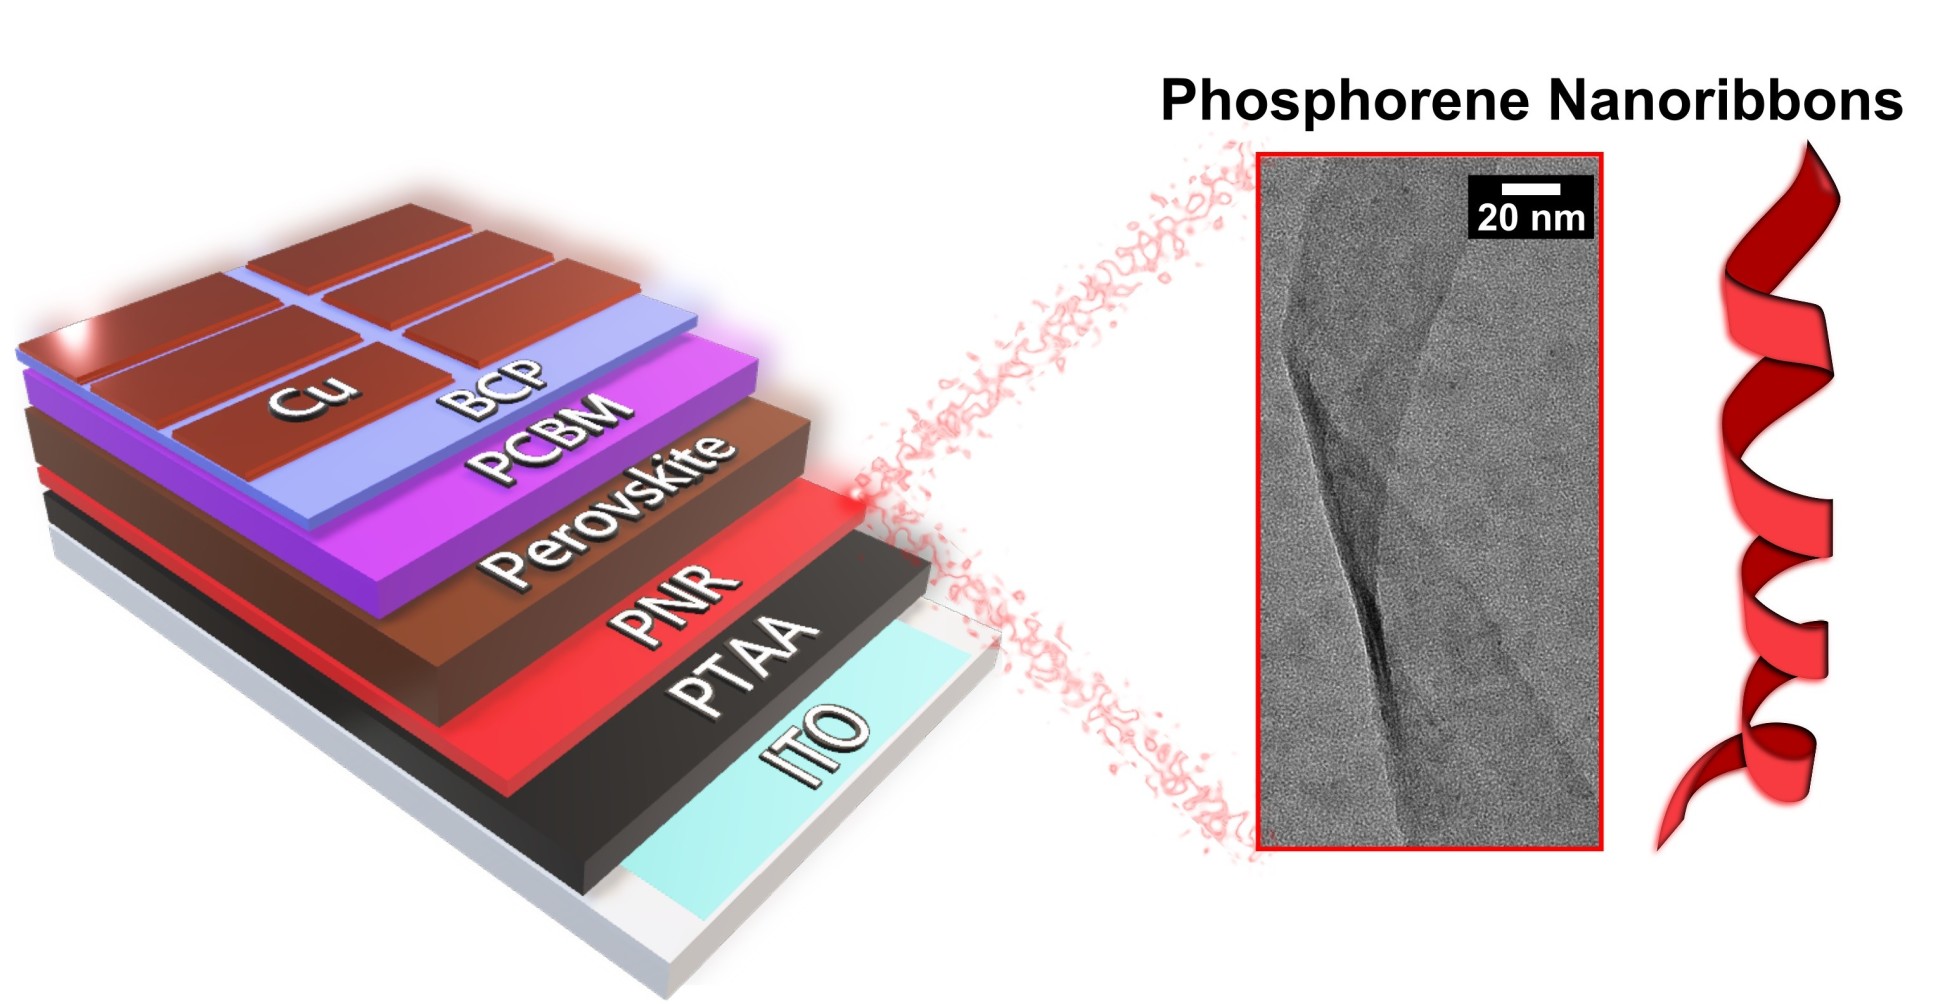 2D phosphorene nanosheets, quantum dots, nanoribbons: synthesis and  biomedical applications - Biomaterials Science (RSC Publishing)  DOI:10.1039/D0BM01972K